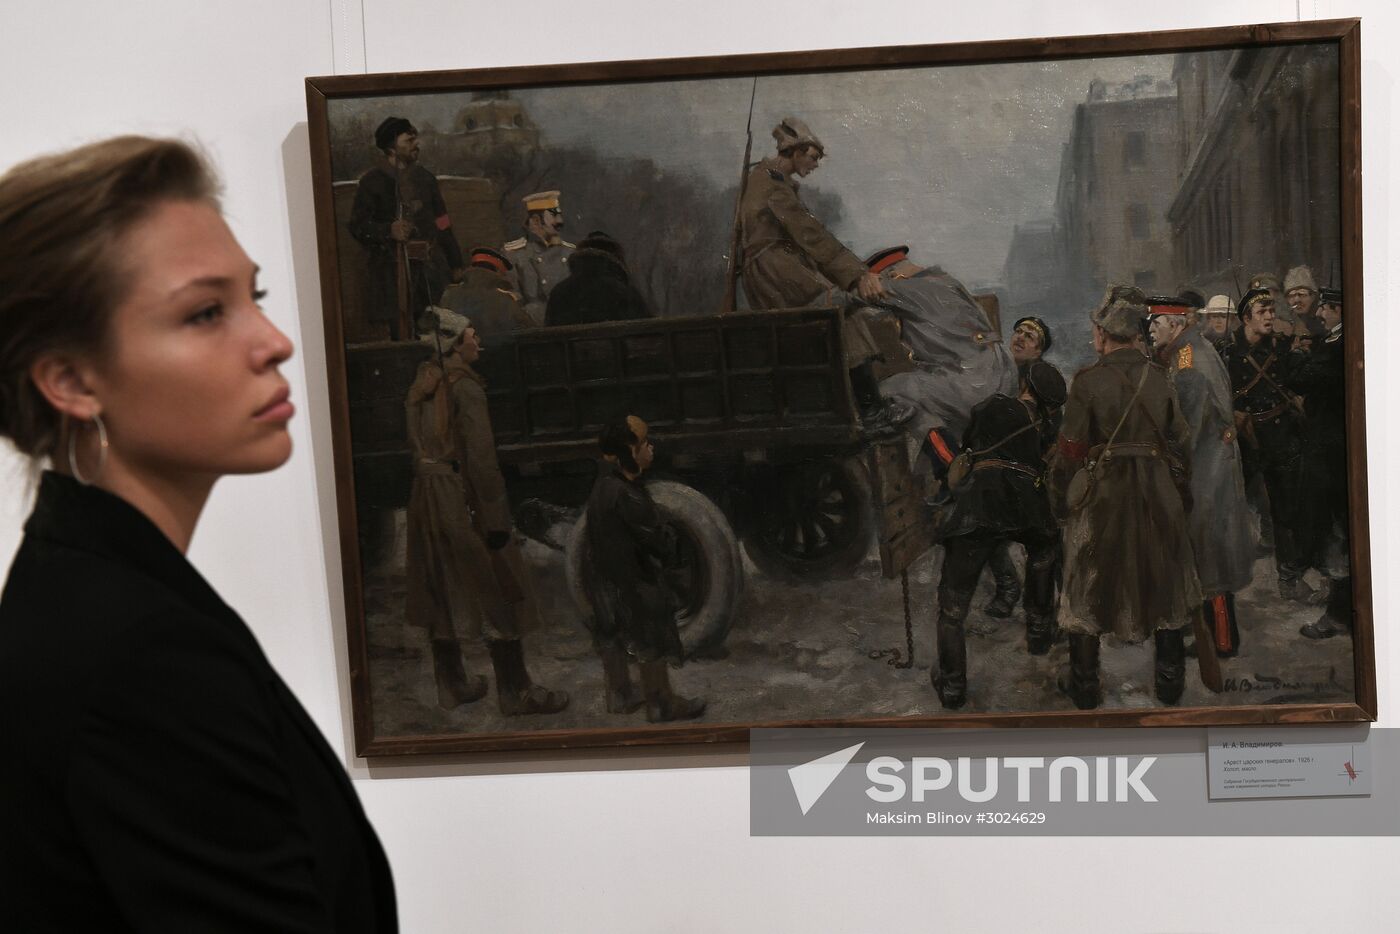 Exhibition "Revolution - The First Salvo - The Uneasy Times Through the Eyes of Artist Ivan Vladimirov"